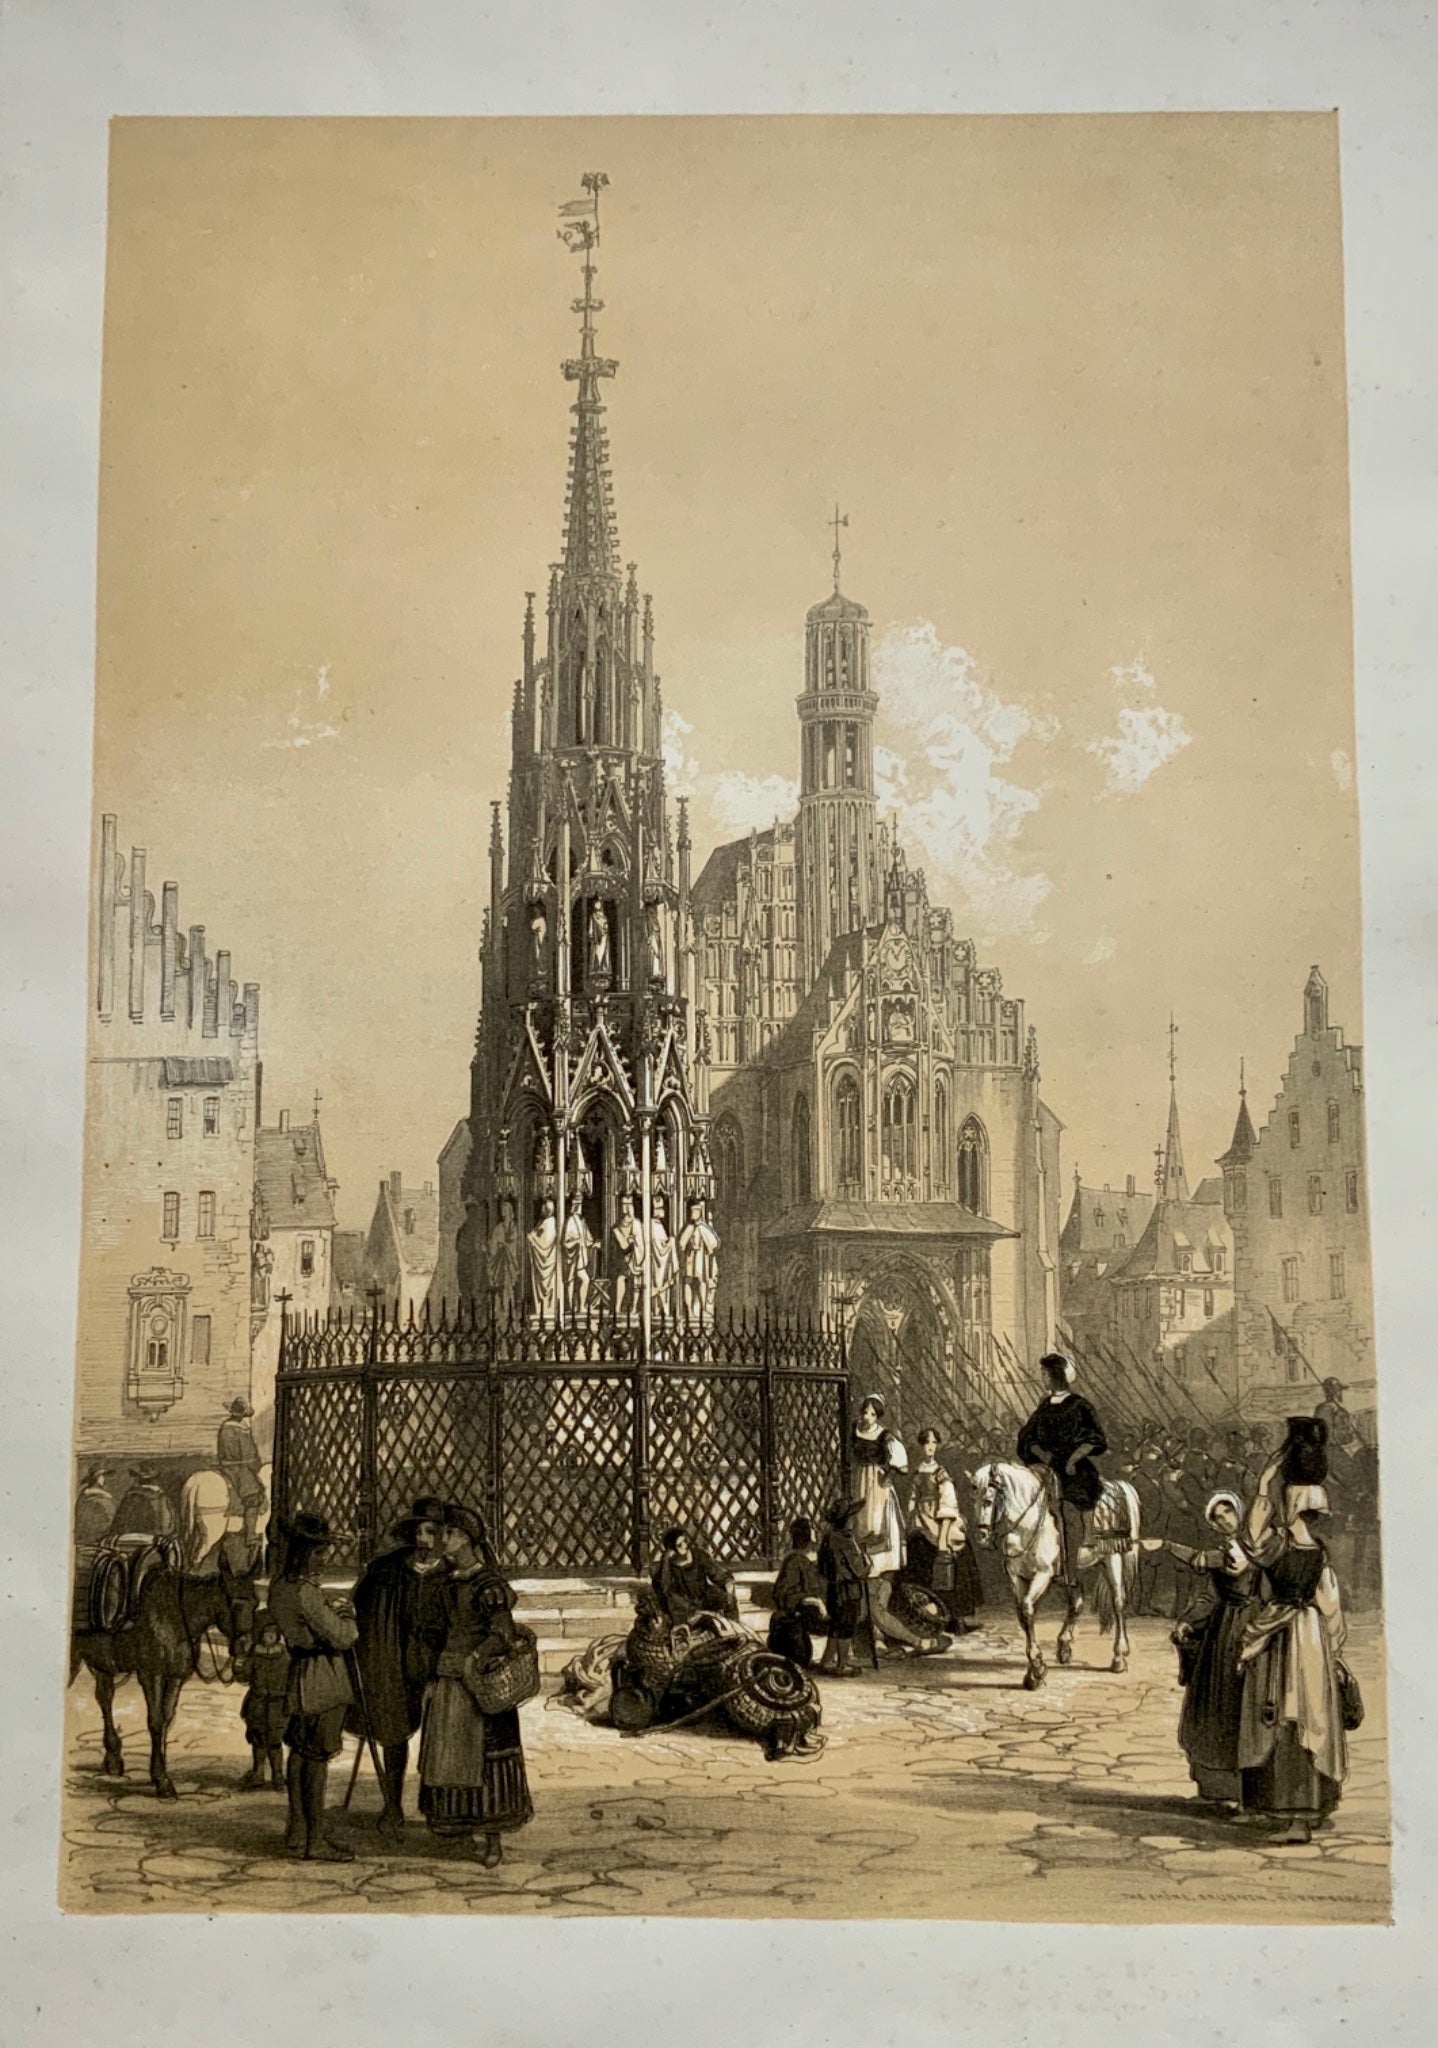 NÜRNBERG. Nuremberg. Lithographie mit Tonplatte, um 1840, 38 x 27 cm.